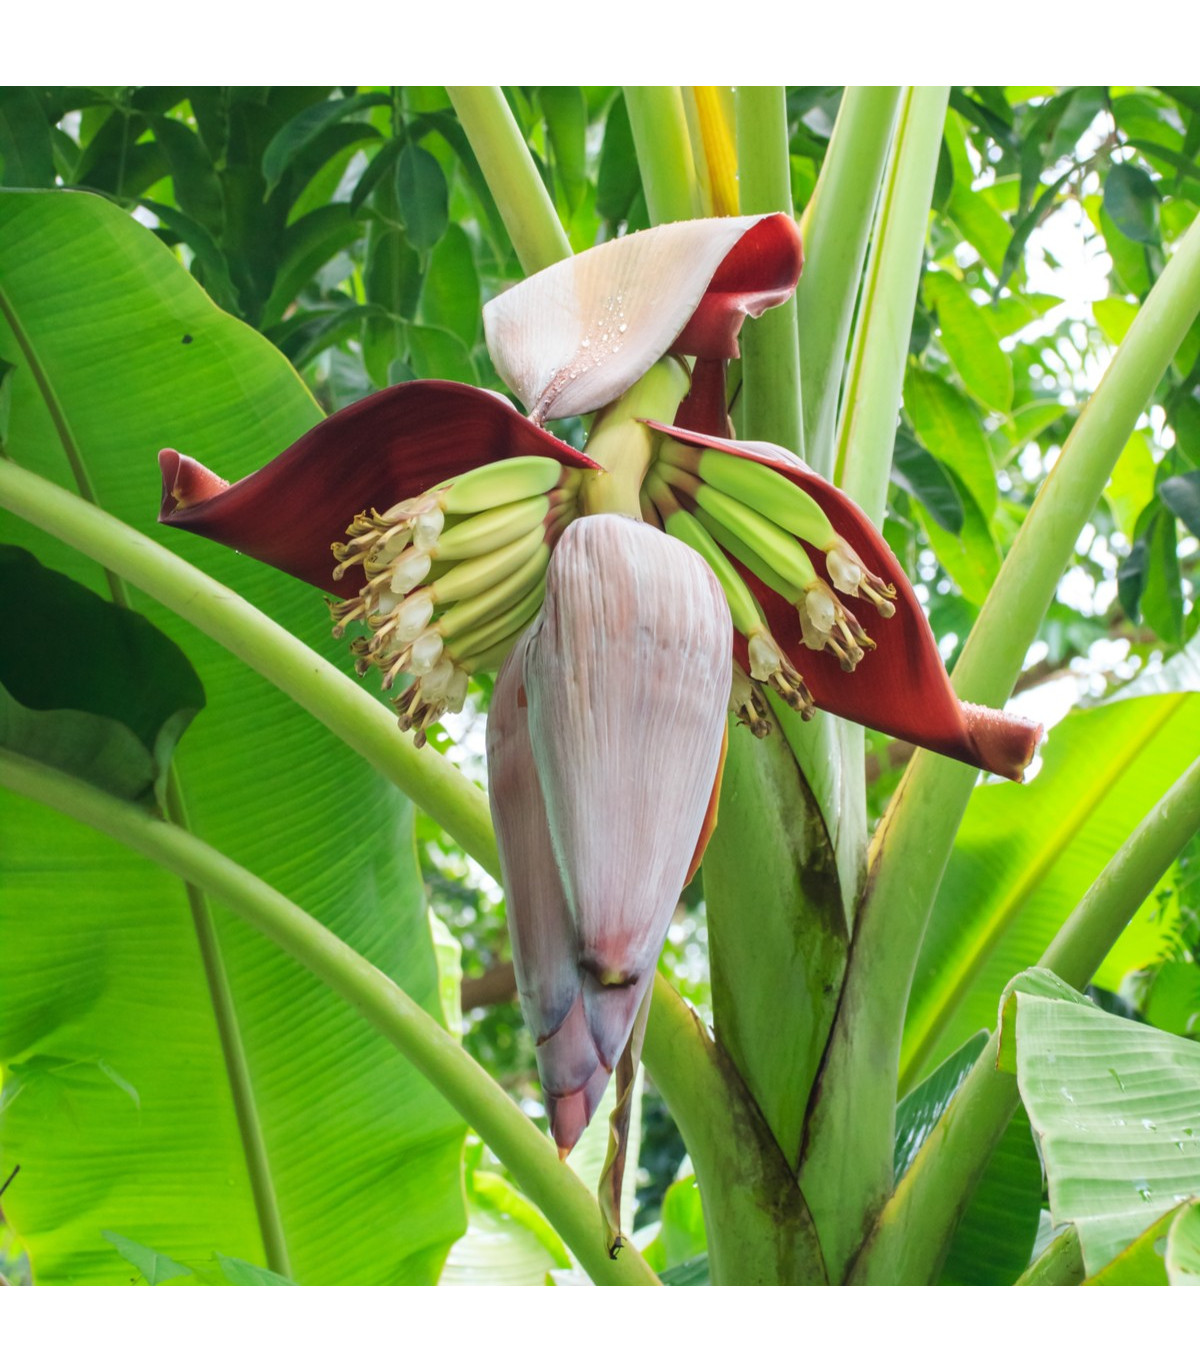 Banánovník - Musa sikkimensis - semená banánovníka - 3 ks